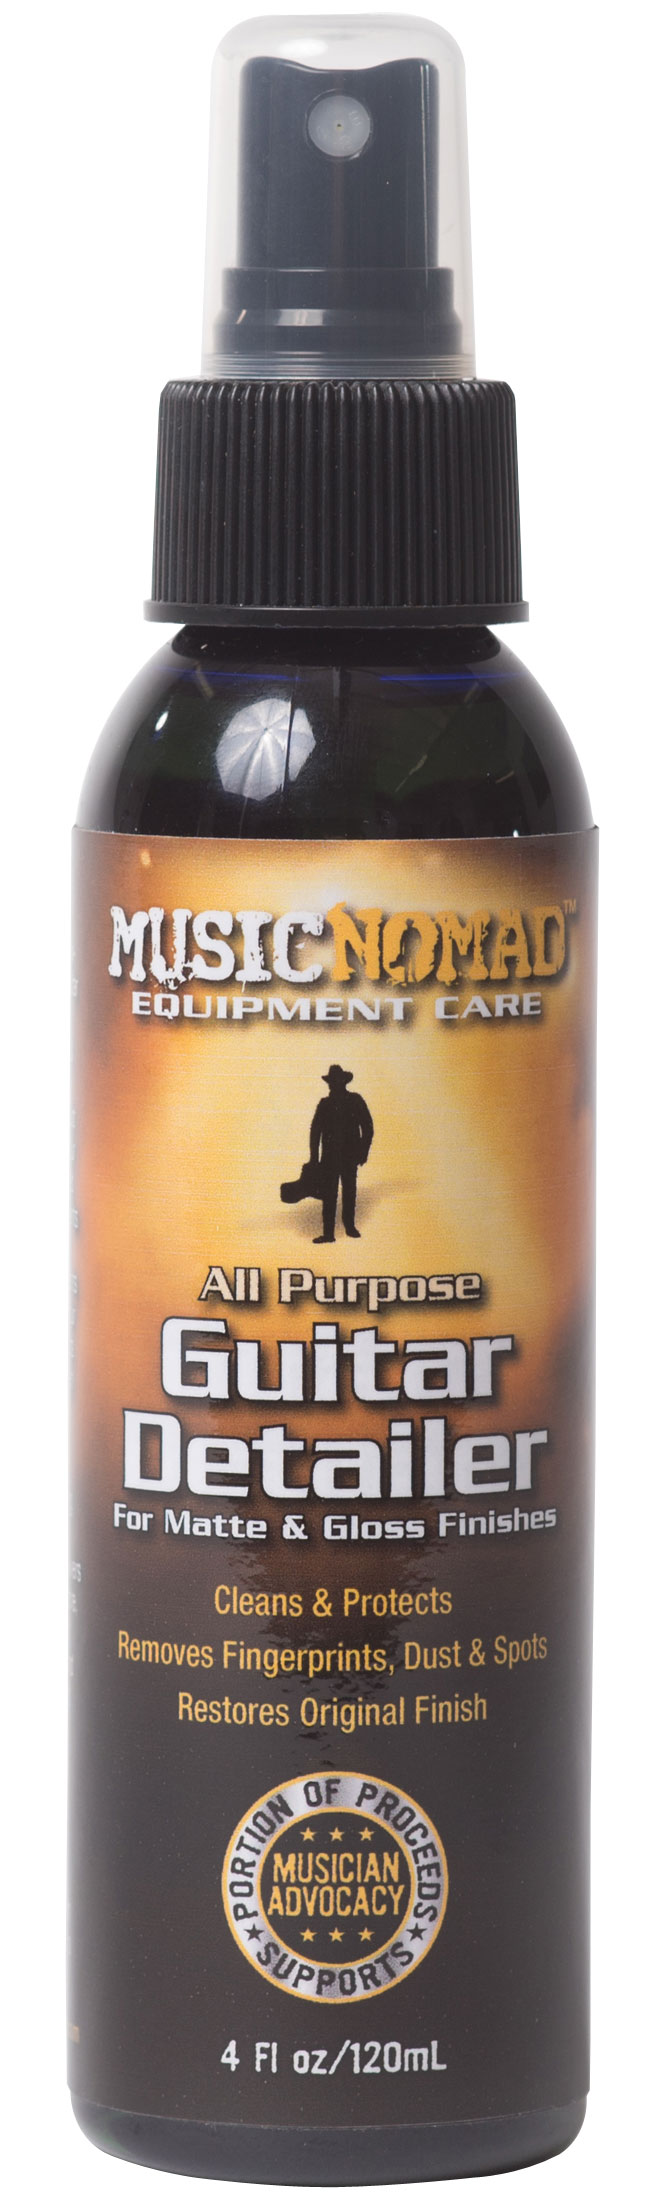 Music-Nomad Guitar Detailer